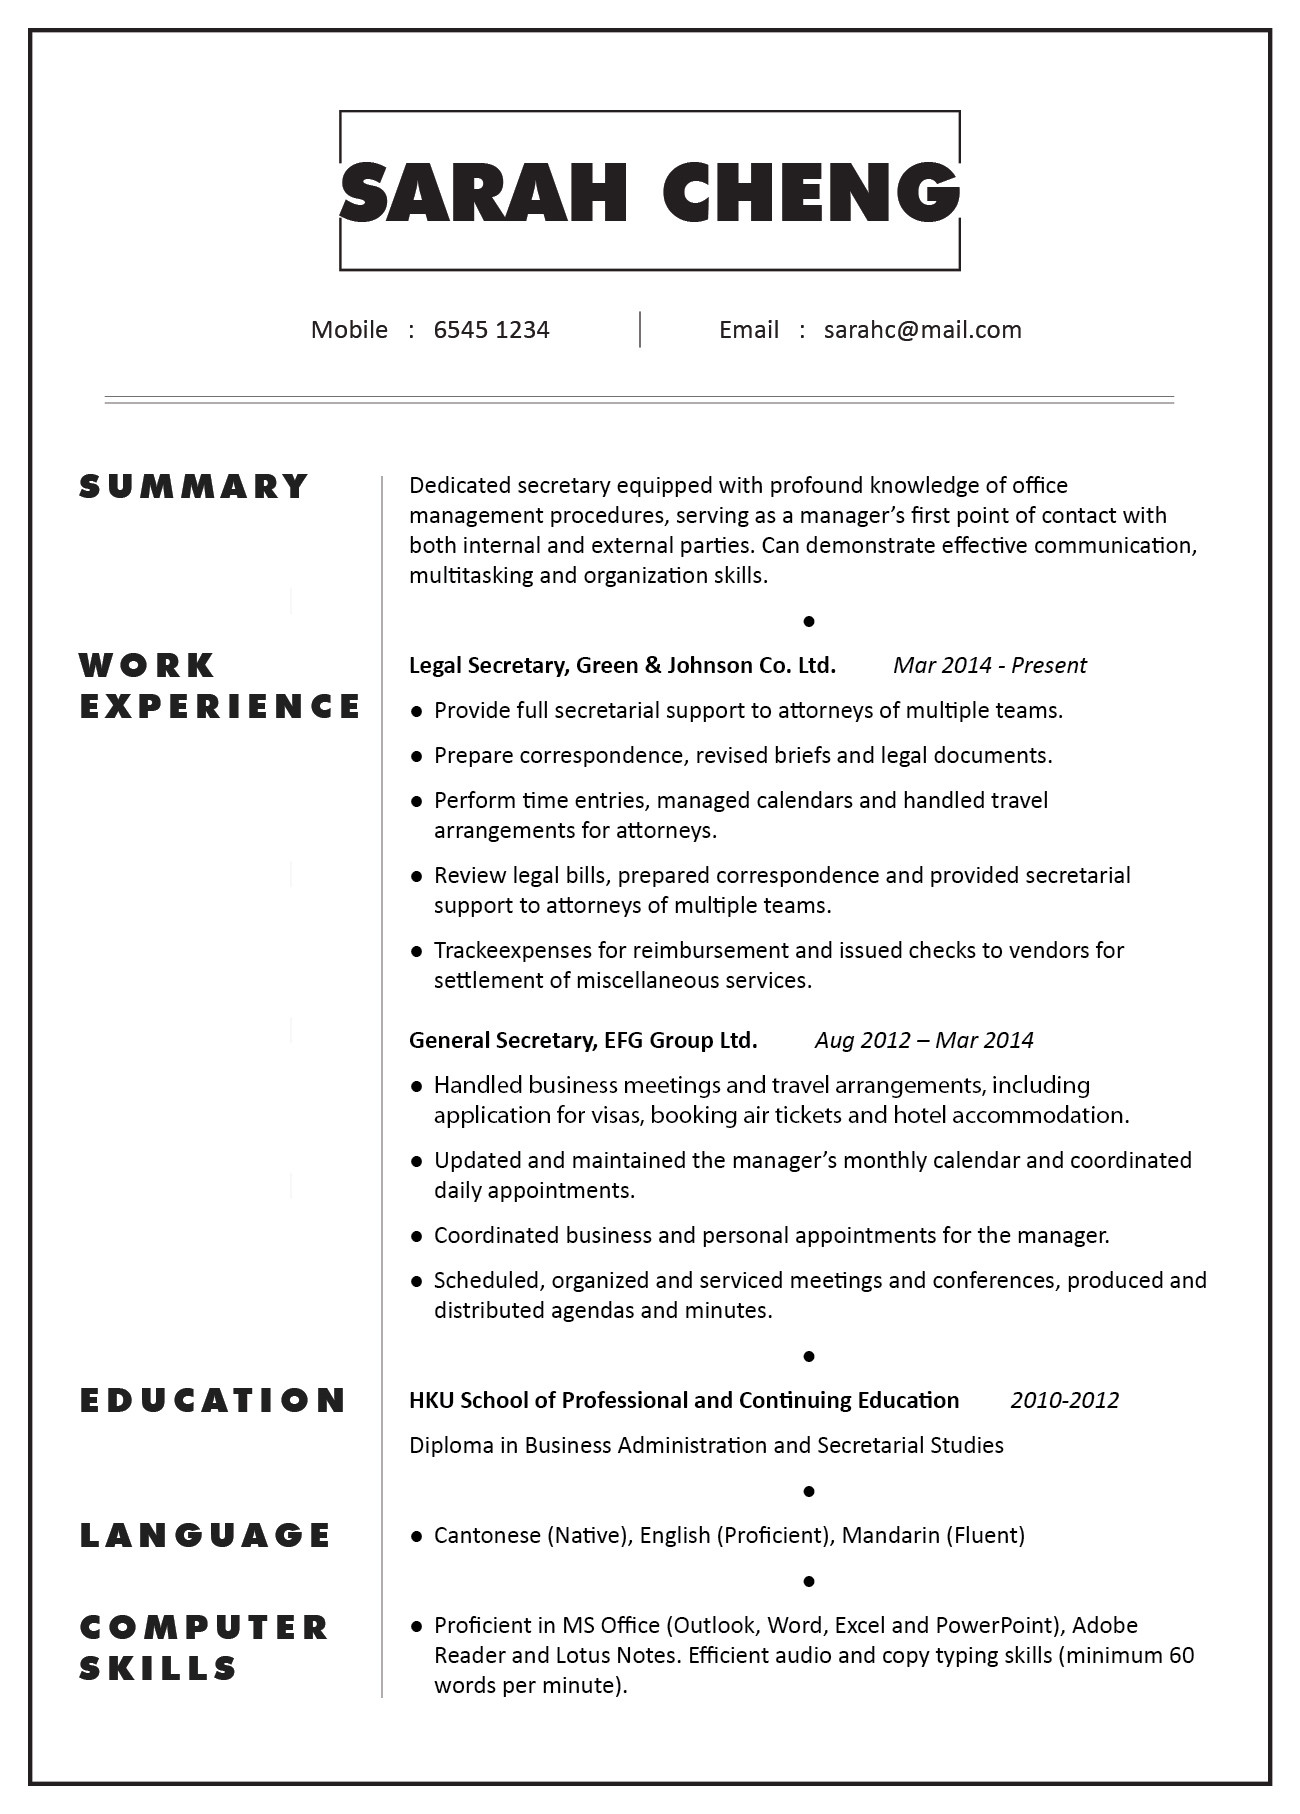 Sample Resume for Secretary Of the Company Cv & Profile Sample â Secretary Jobsdb Hong Kong